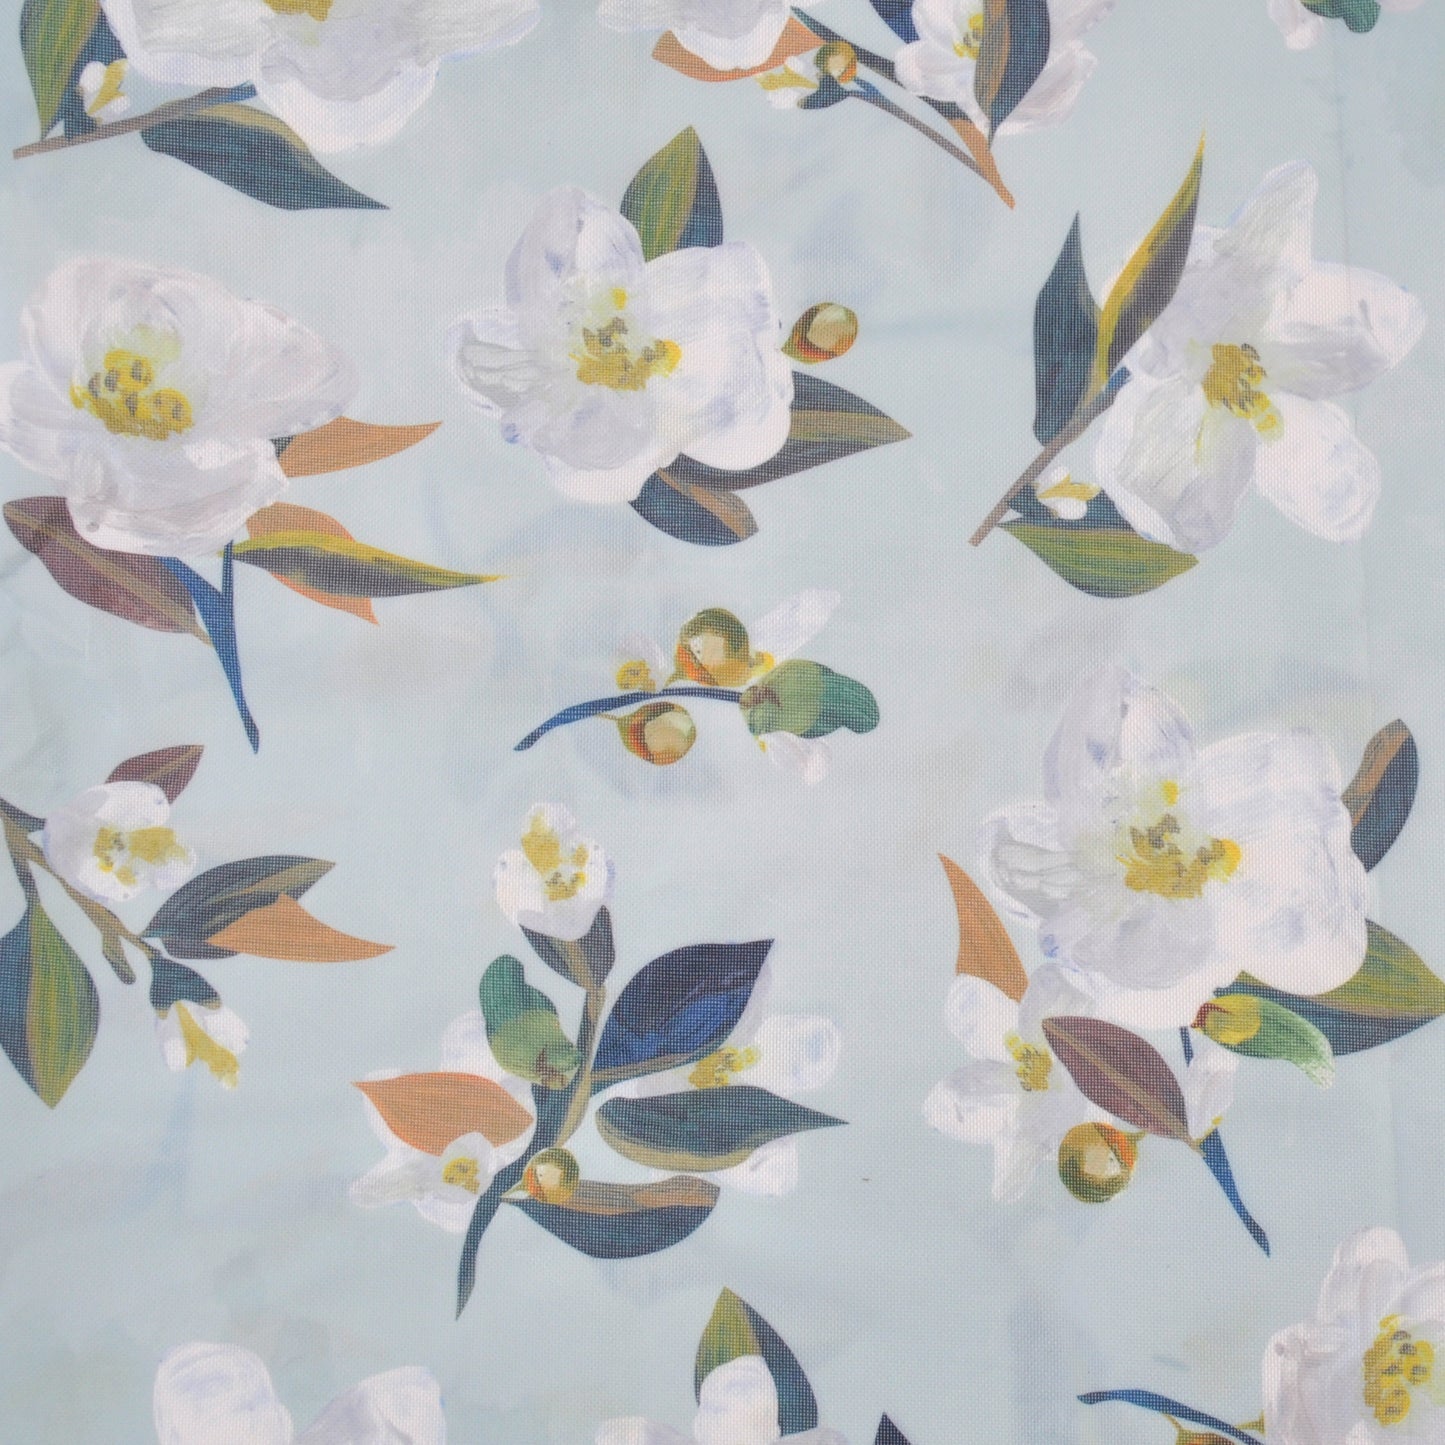 Picnic Blanket - Magnolia